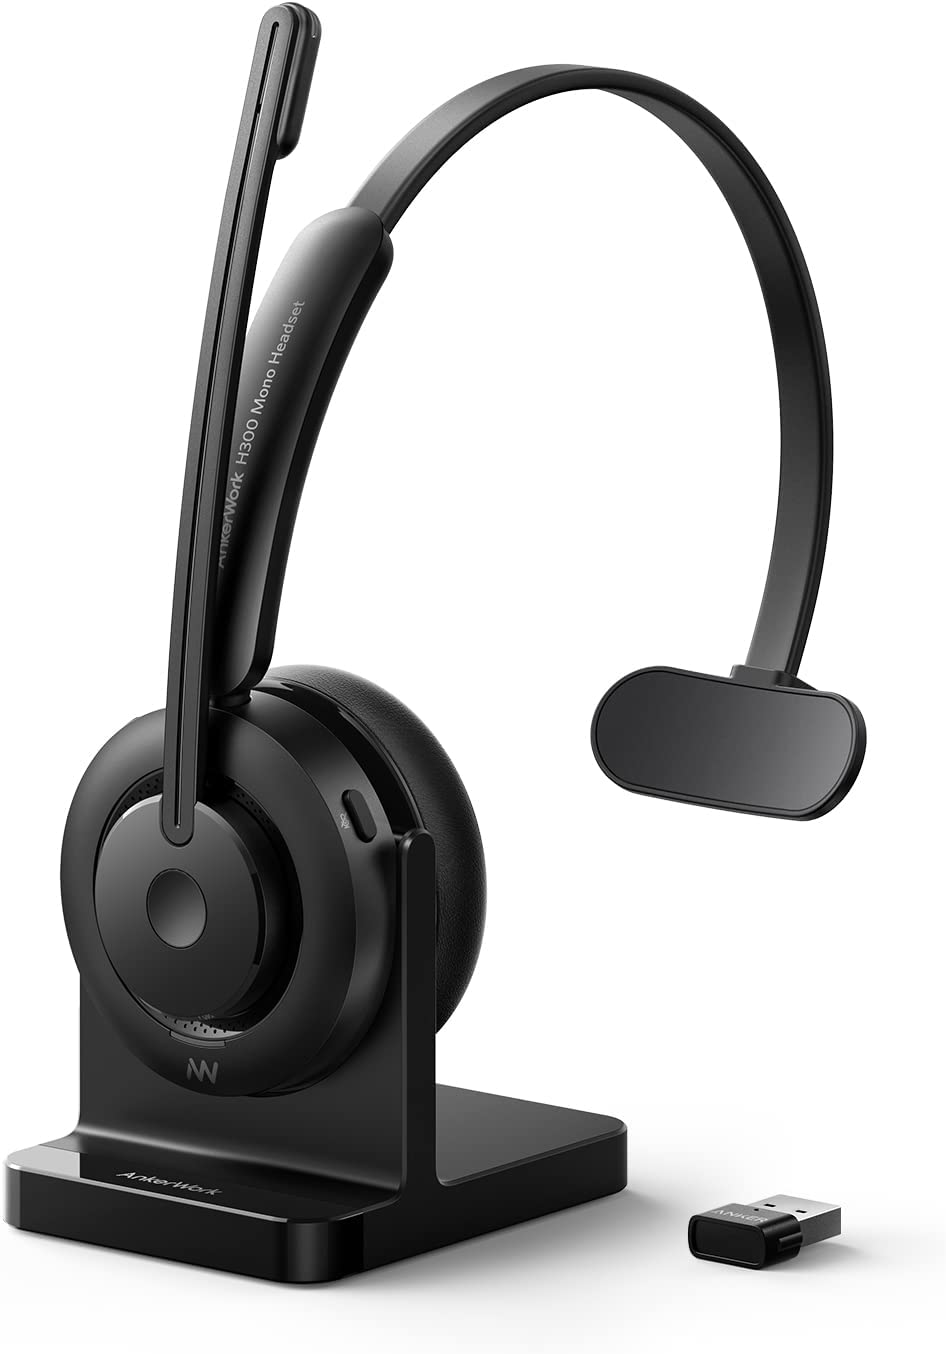 AnkerWork H300 Headset